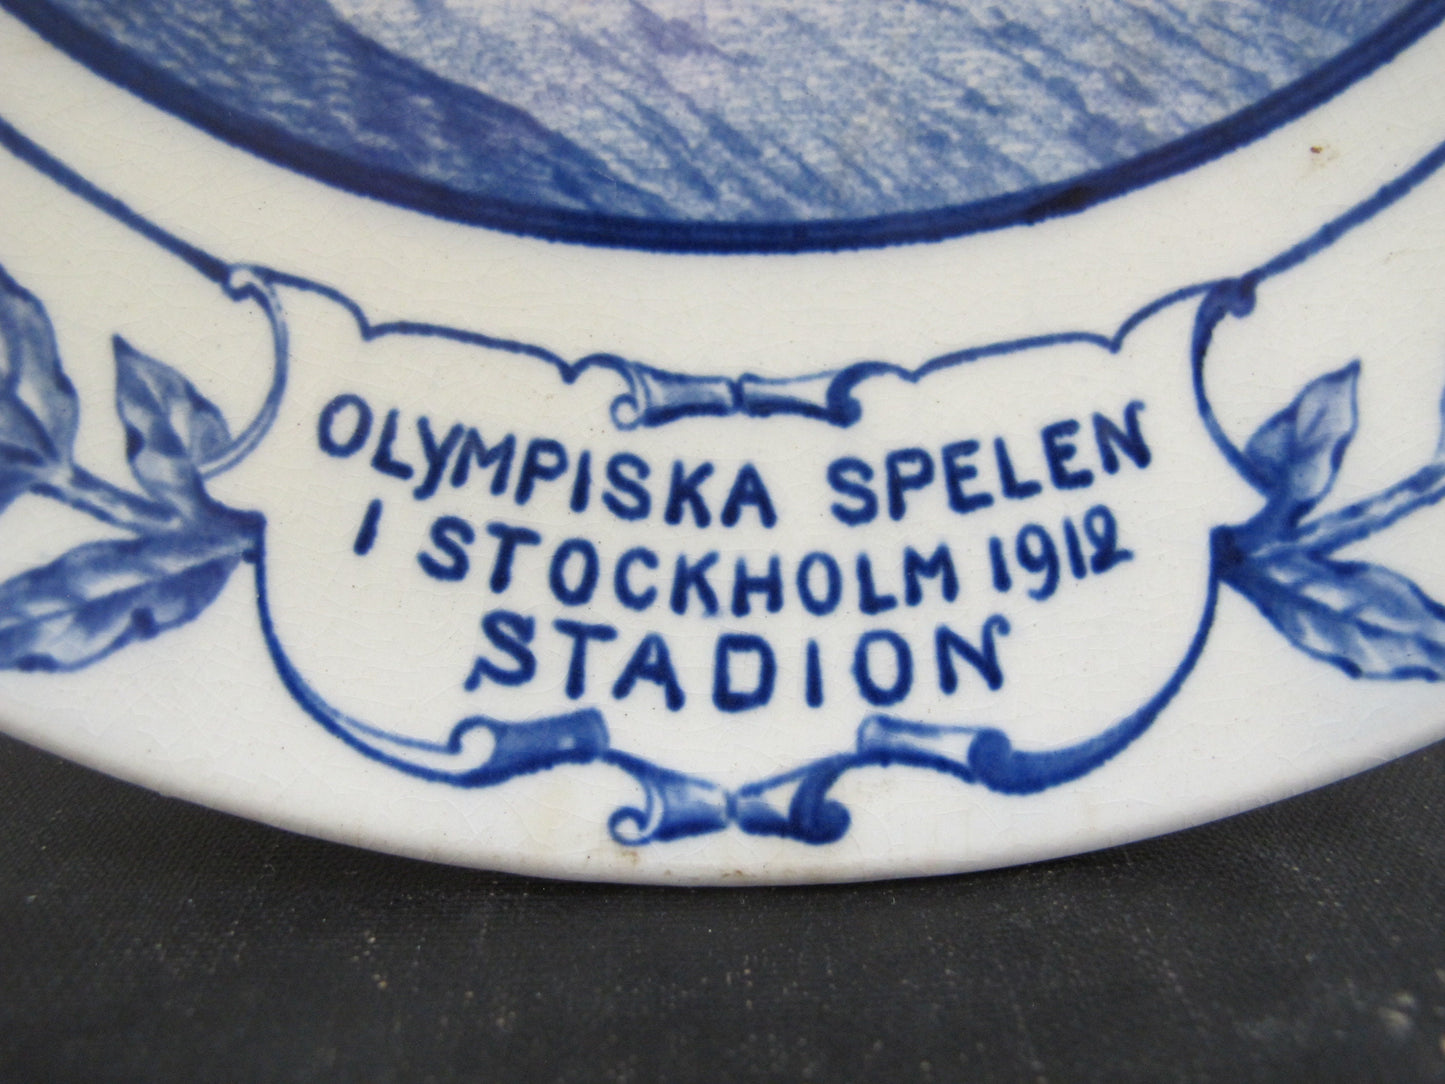 Stockholm Olympics Plate 1912 Commemorative Plate Rorstrand Sweden Scandinavian Edwardian